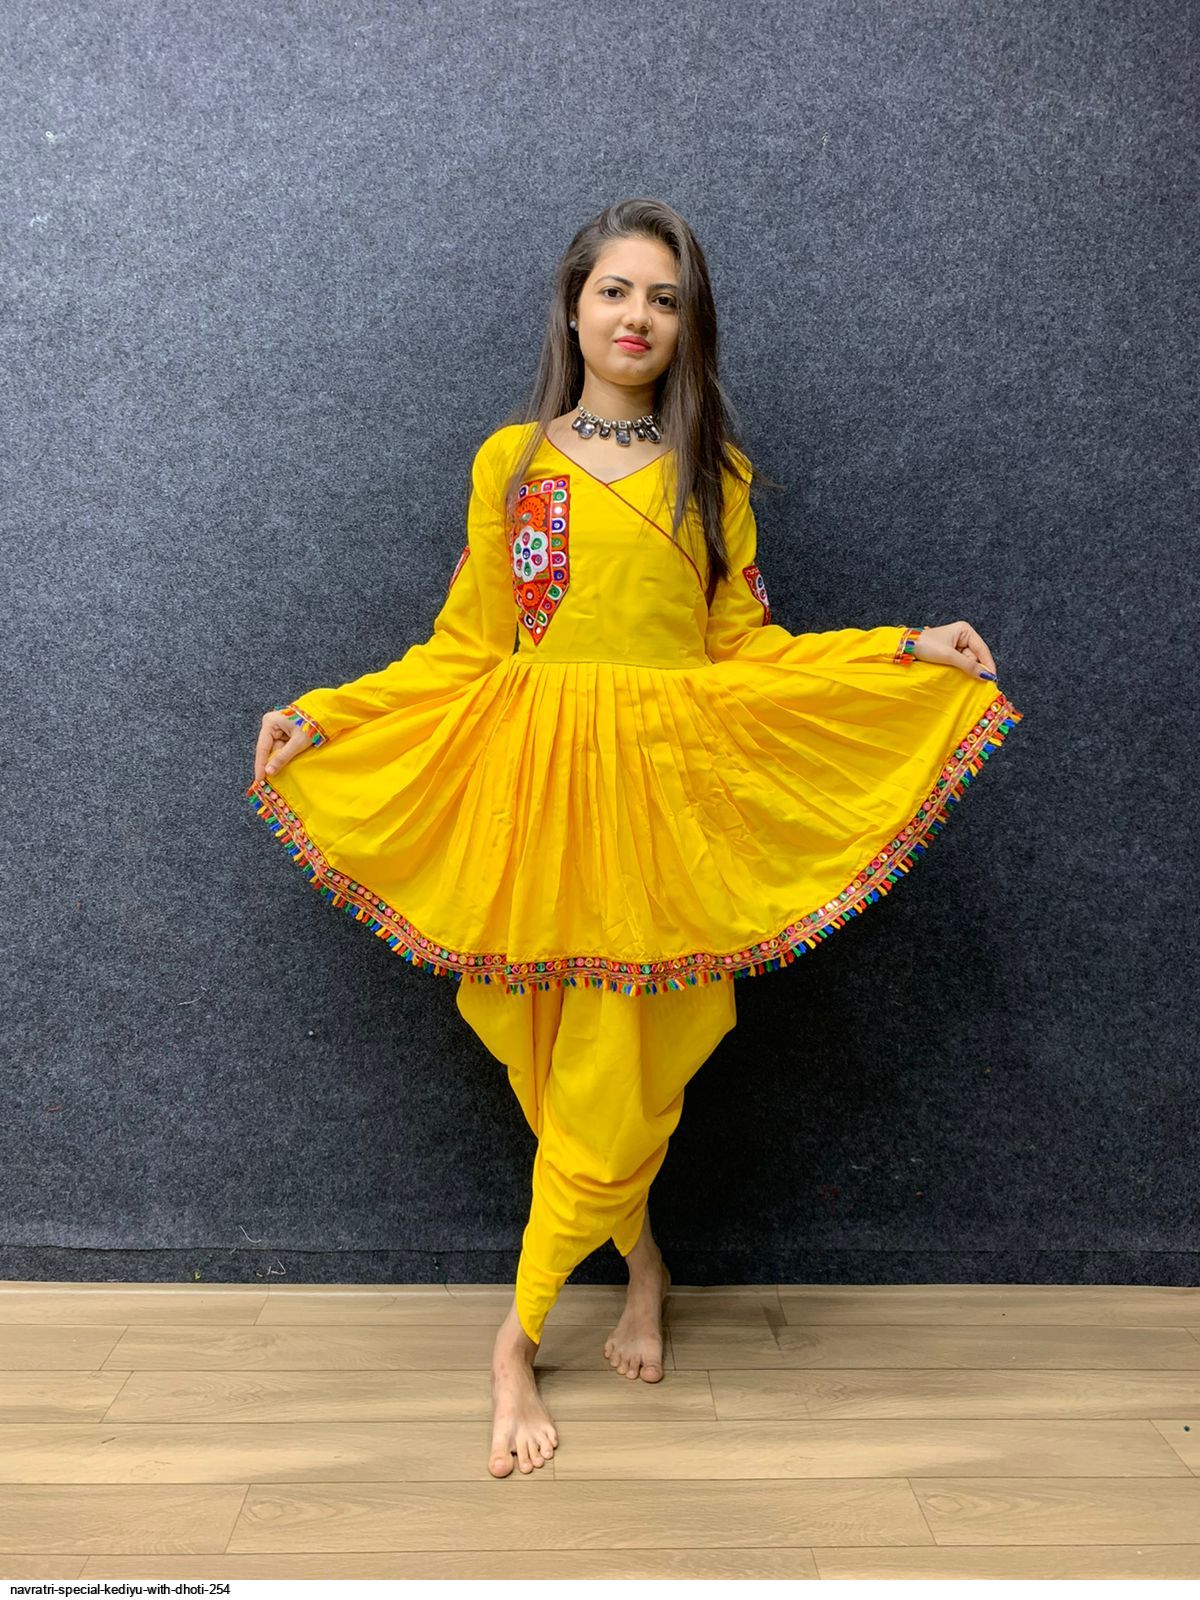 Traditional Gujarati Dresses - Chorno & Chaniya Choli - Holidify